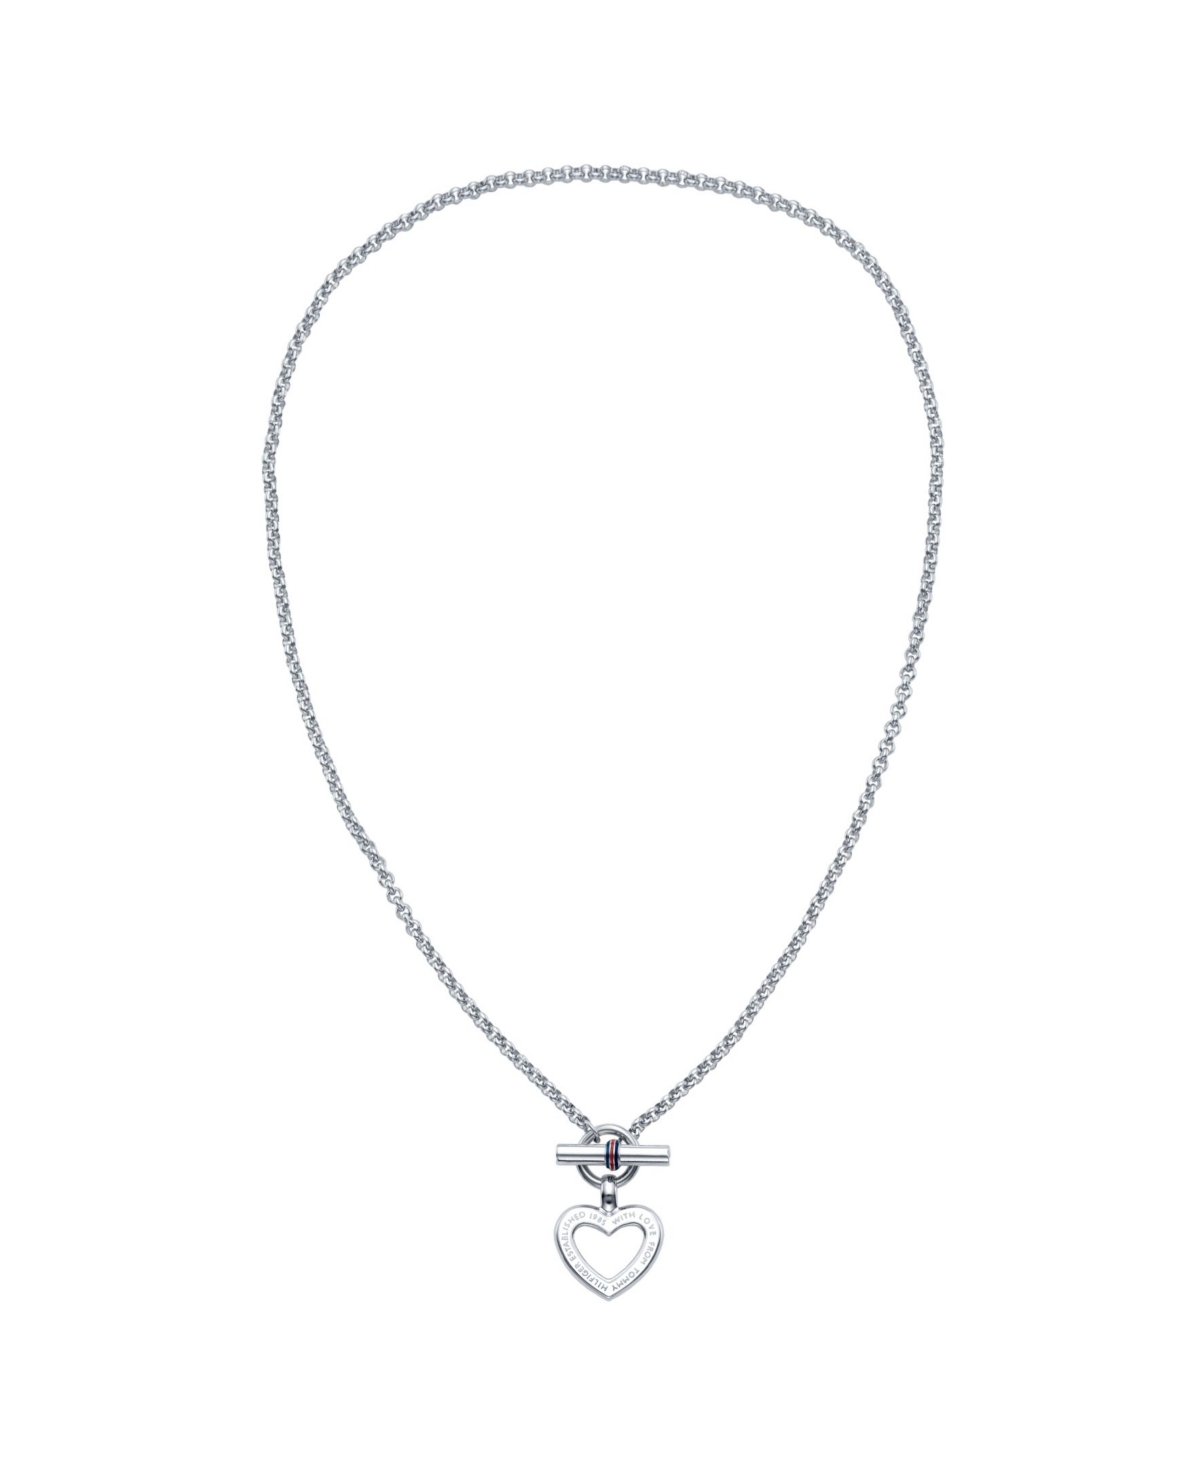 Women's Heart Necklace - Silver-Tone